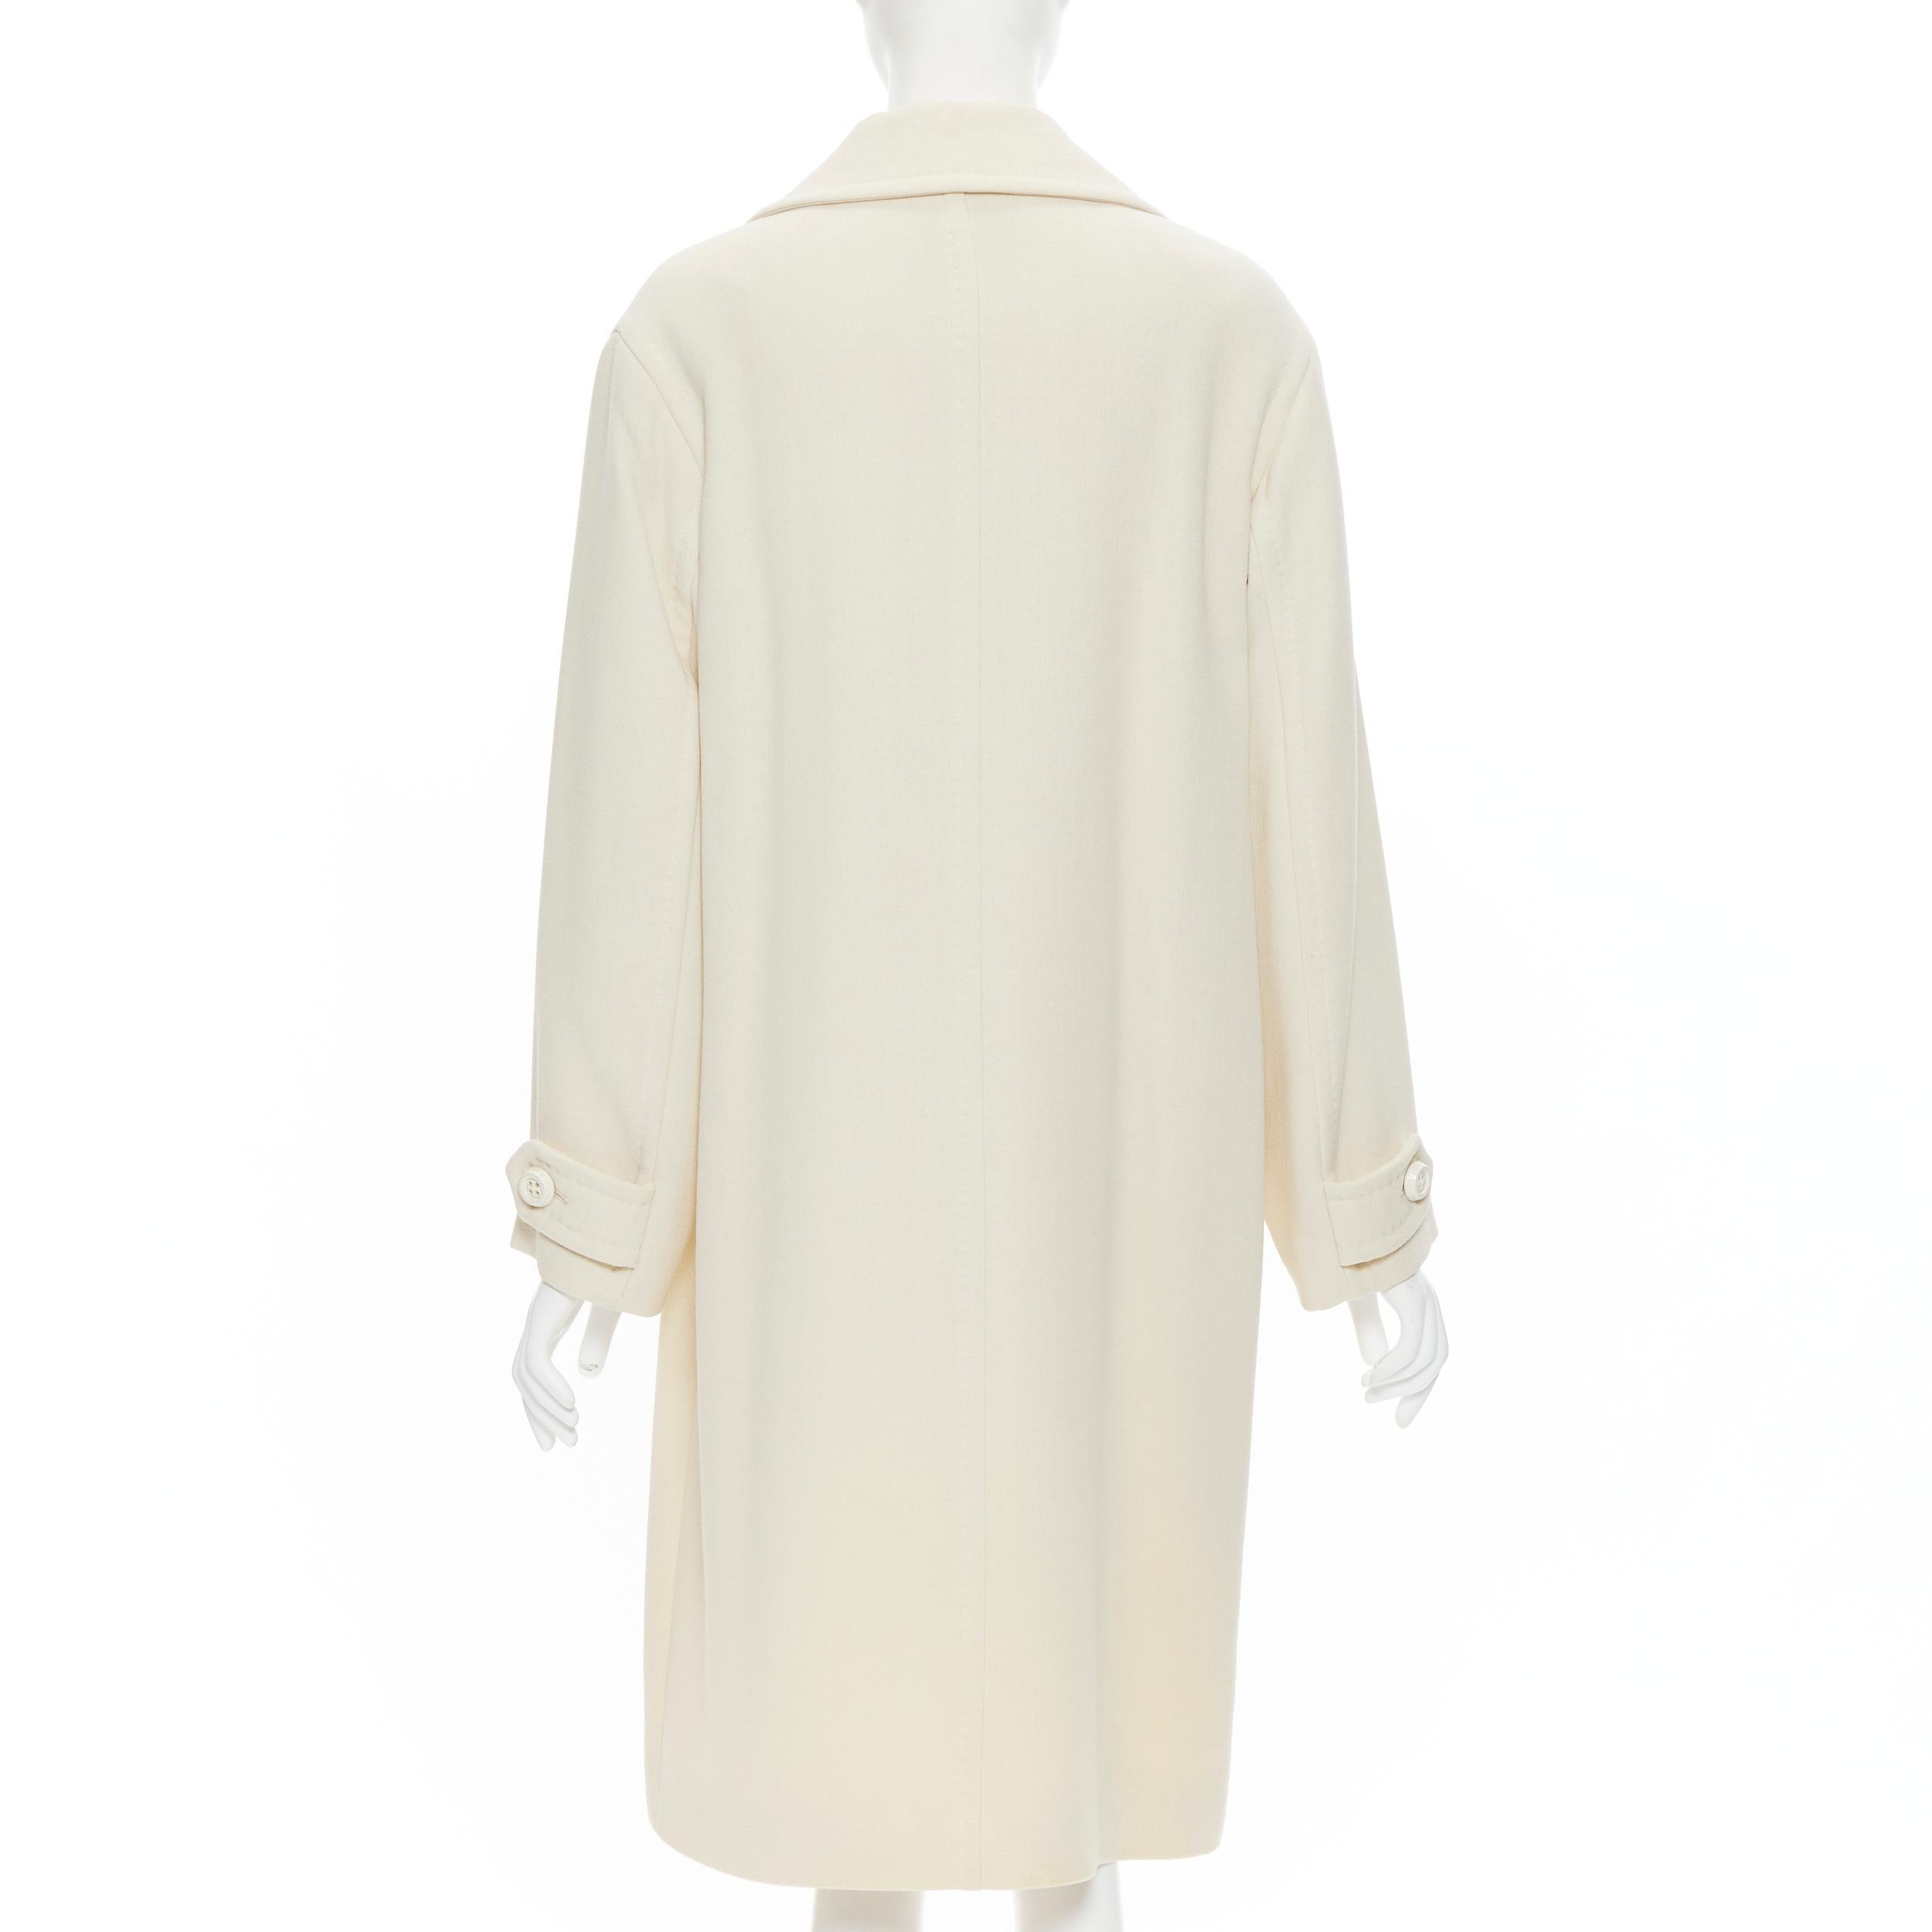 Women's GIANFRANCO FERRE STUDIO ivory wool crepe double breasted coat jacket IT42 M